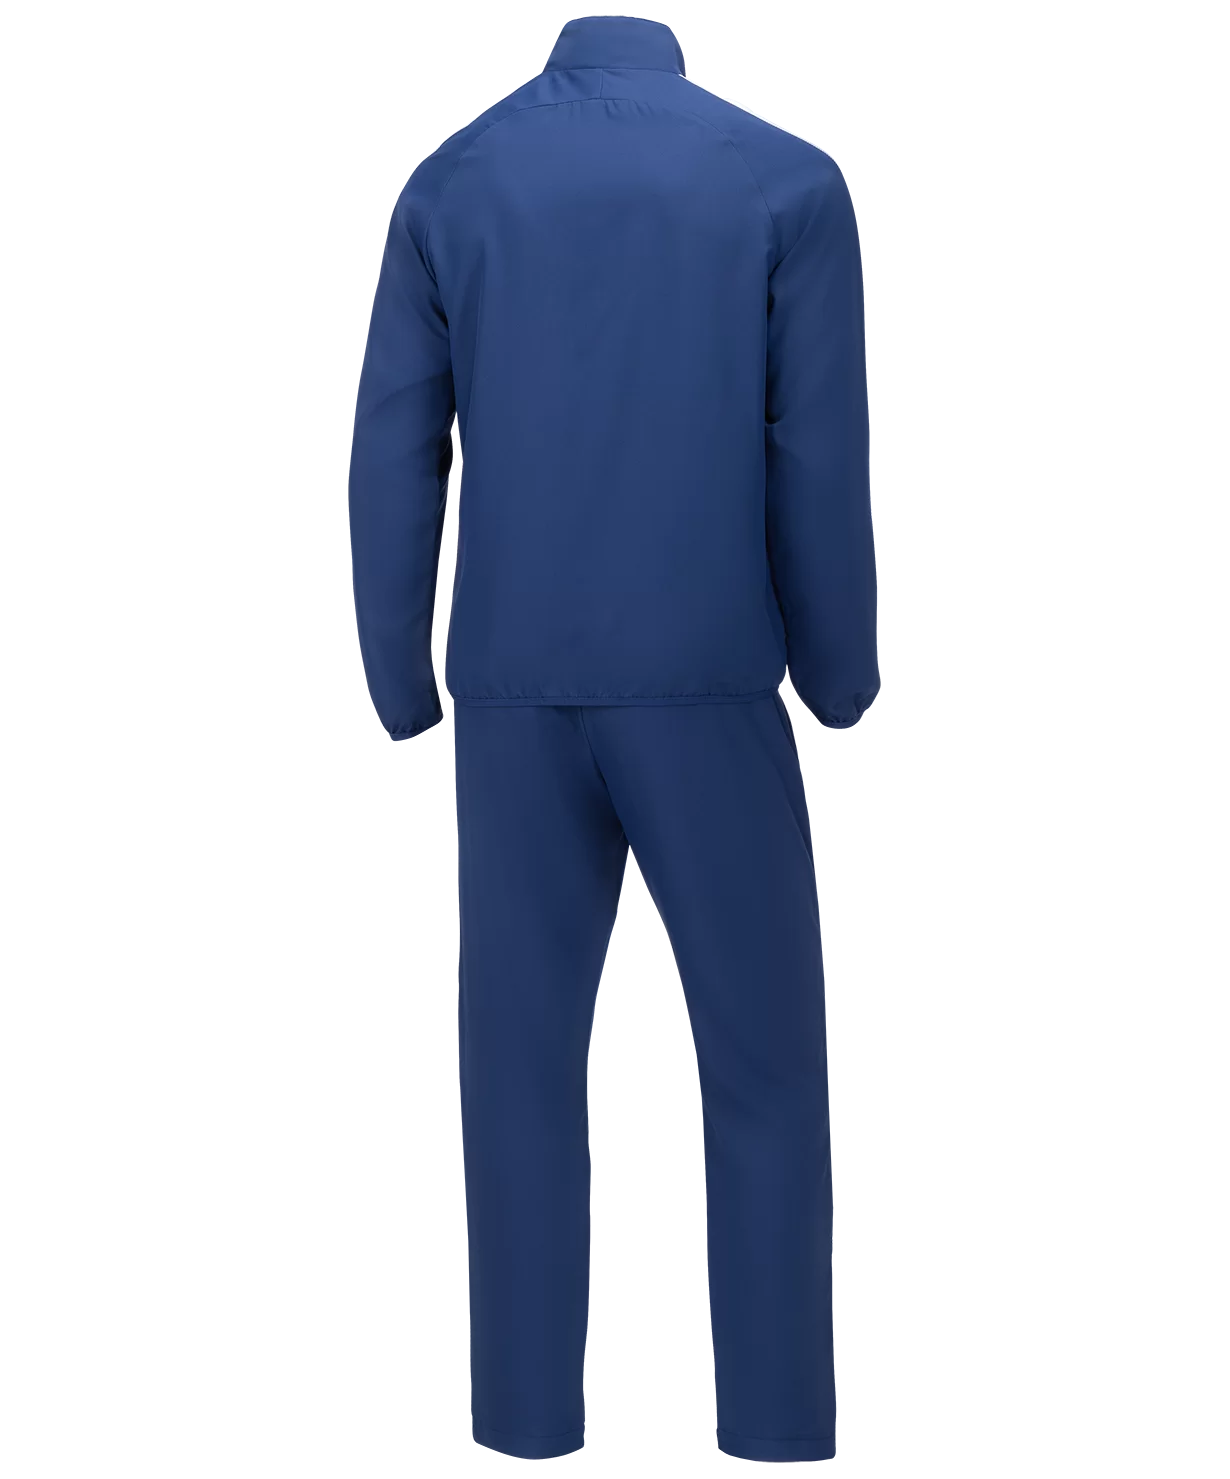 Реальное фото Костюм спортивный CAMP Lined Suit, темно-синий/темно-синий Jögel от магазина СпортЕВ